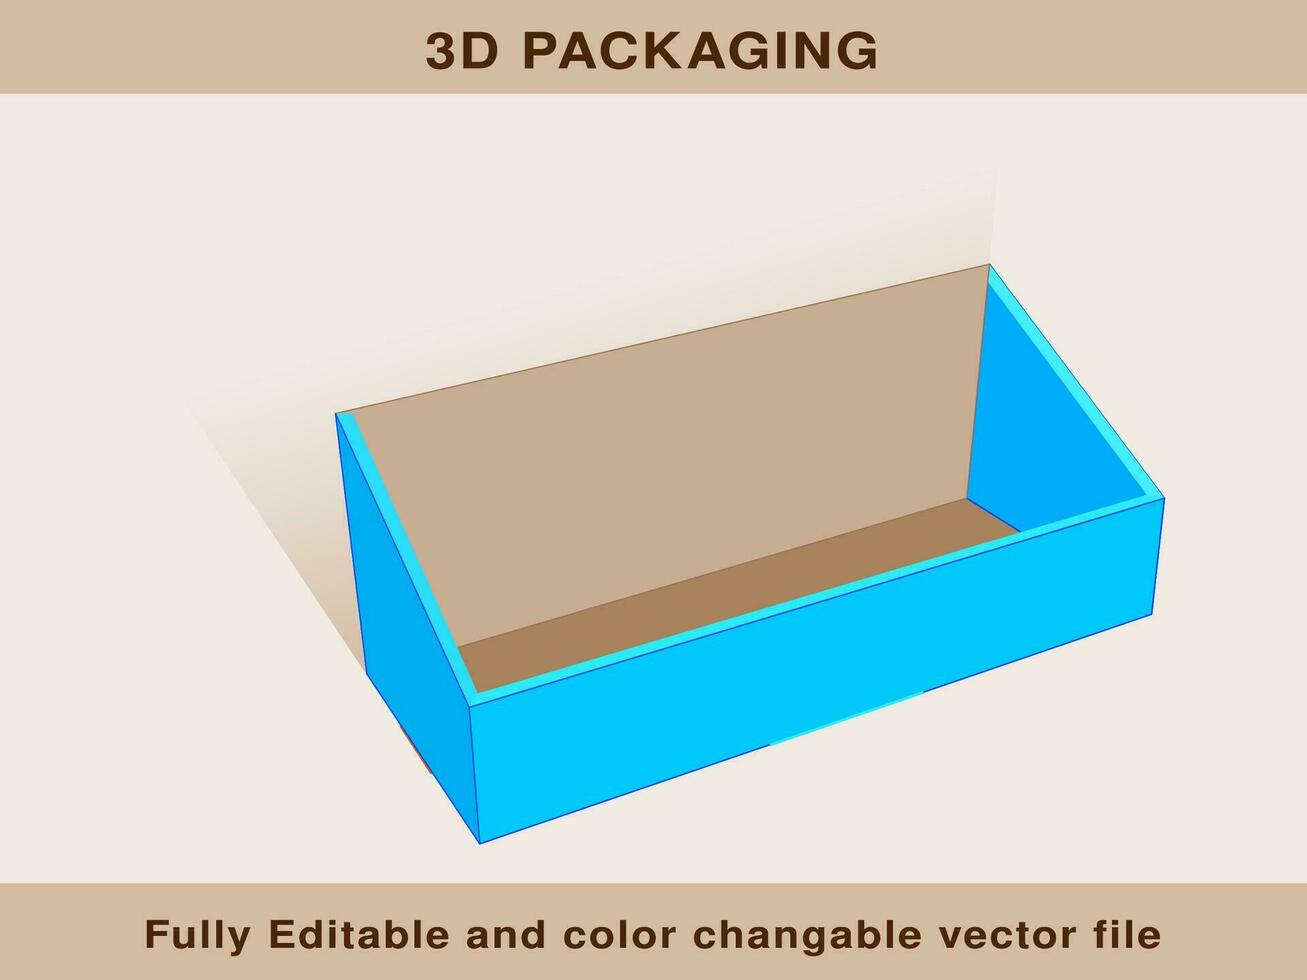 hoekig kant doos met hoofd slots doos dieline sjabloon. vector